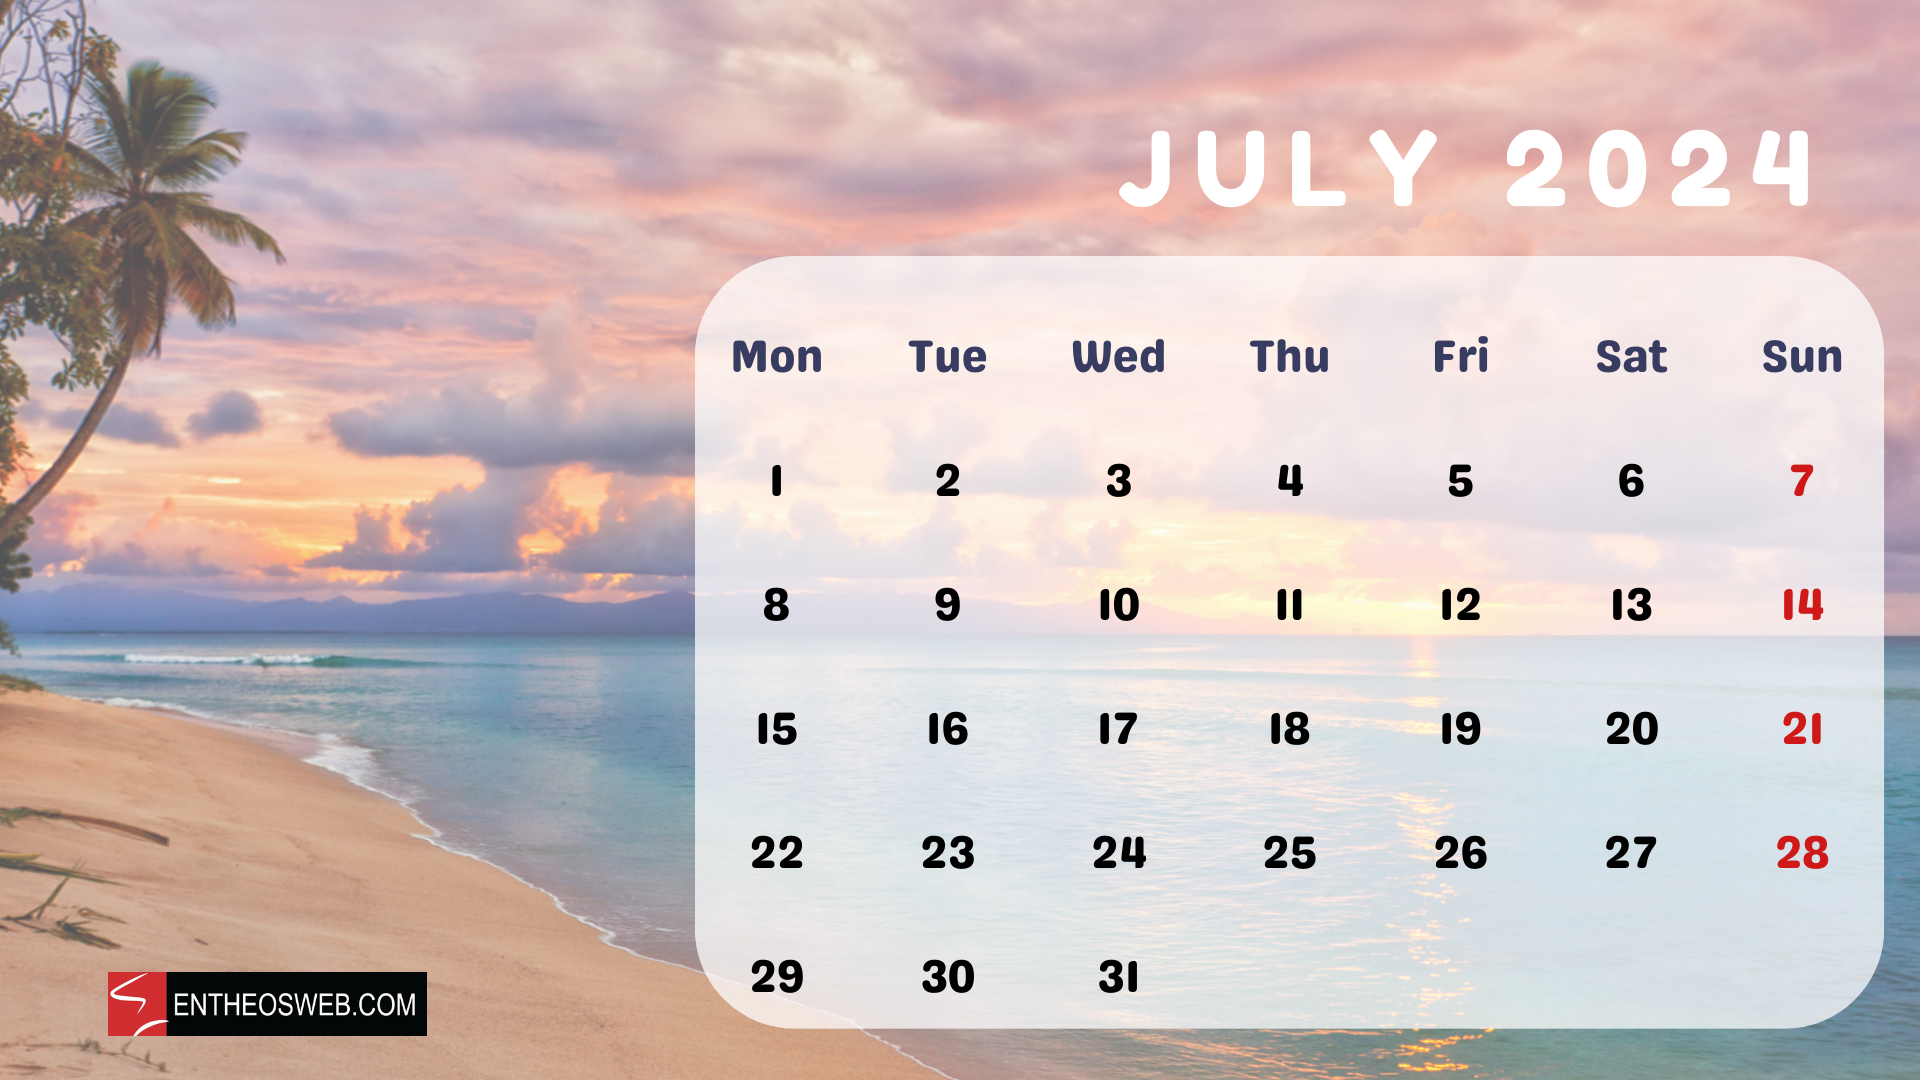 July 2024 Desktop Wallpaper Calendar | Entheosweb with regard to Calendar Wallpaper July 2024